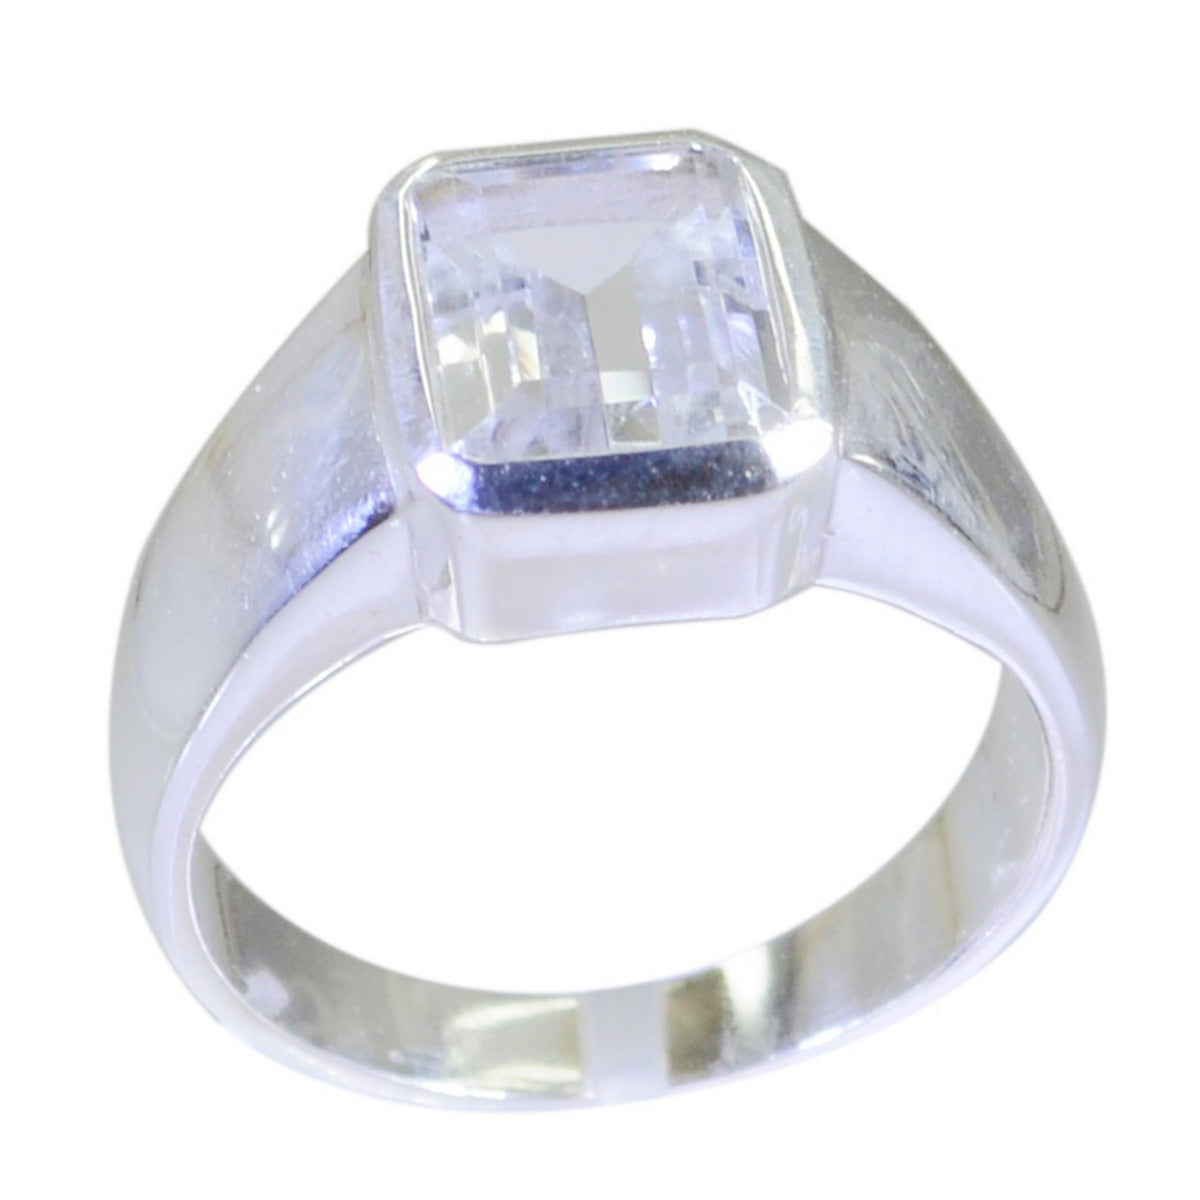 Chocolate-Box Gem Crystal Quartz Silver Ring You Are My Sunshine Jewelry